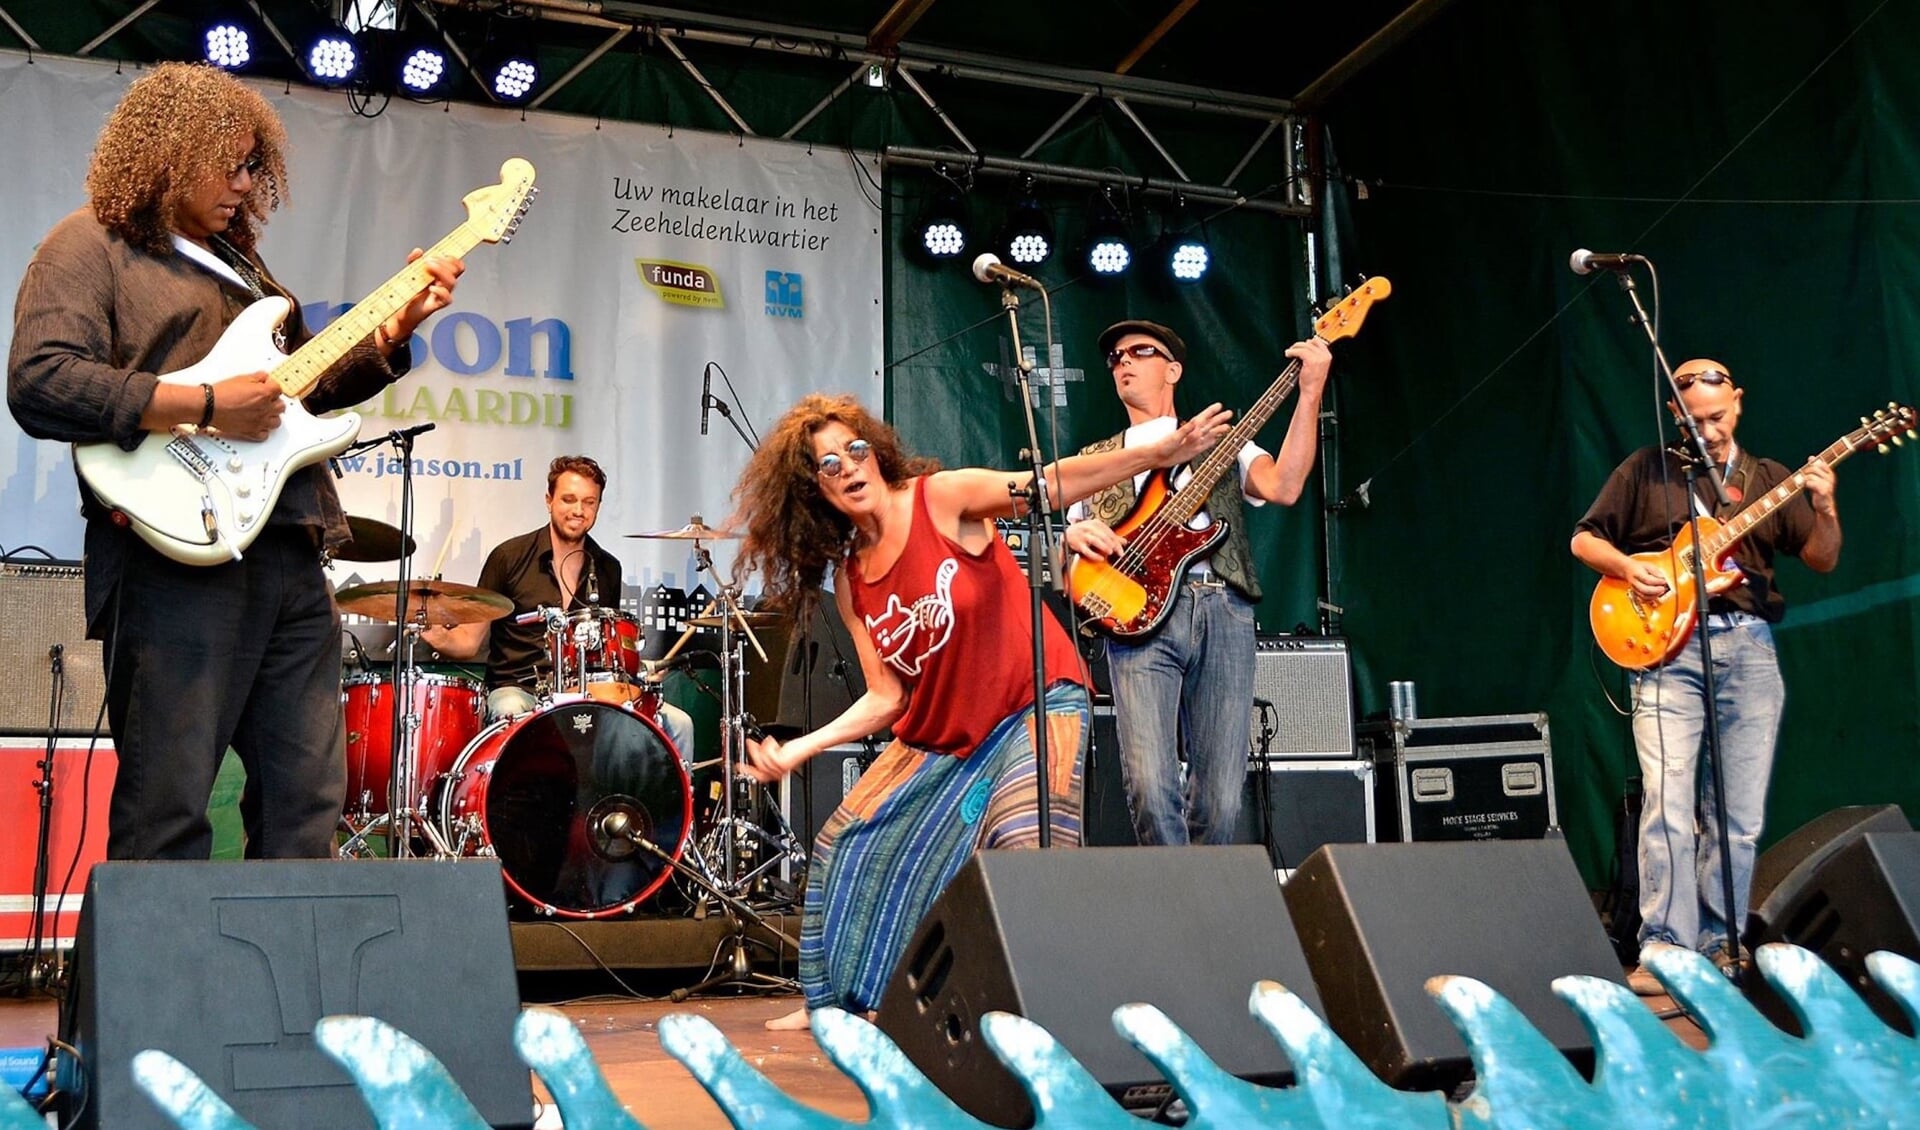  De powerbluesband Raymunda speelt een mix van bluesrock, een vleugje soul, country en jazz.